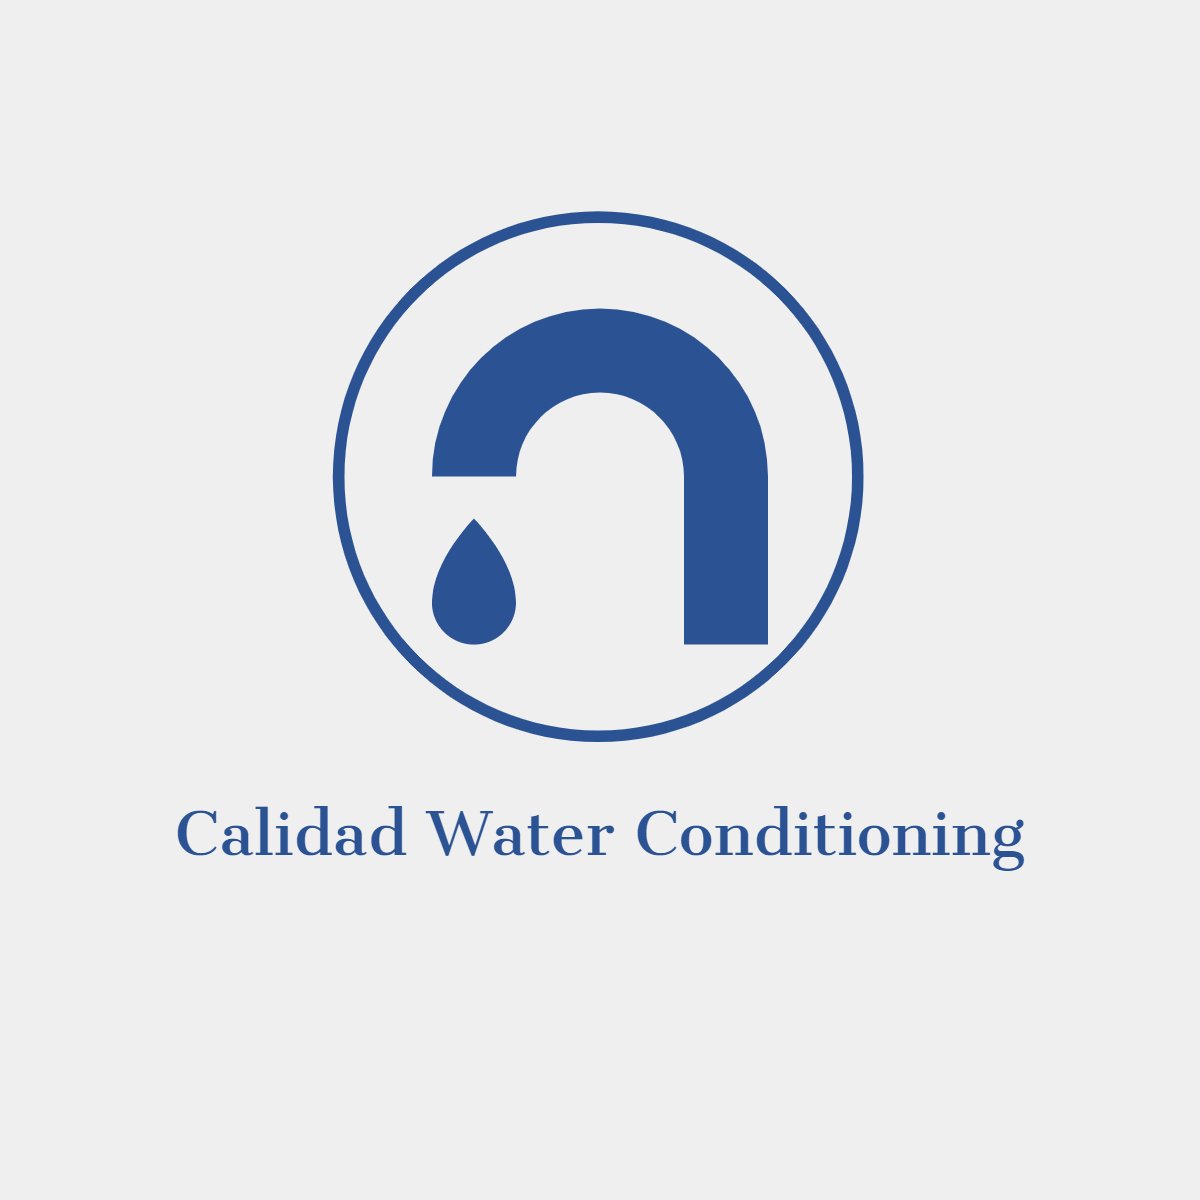 Calidad Superior Water Service Logo